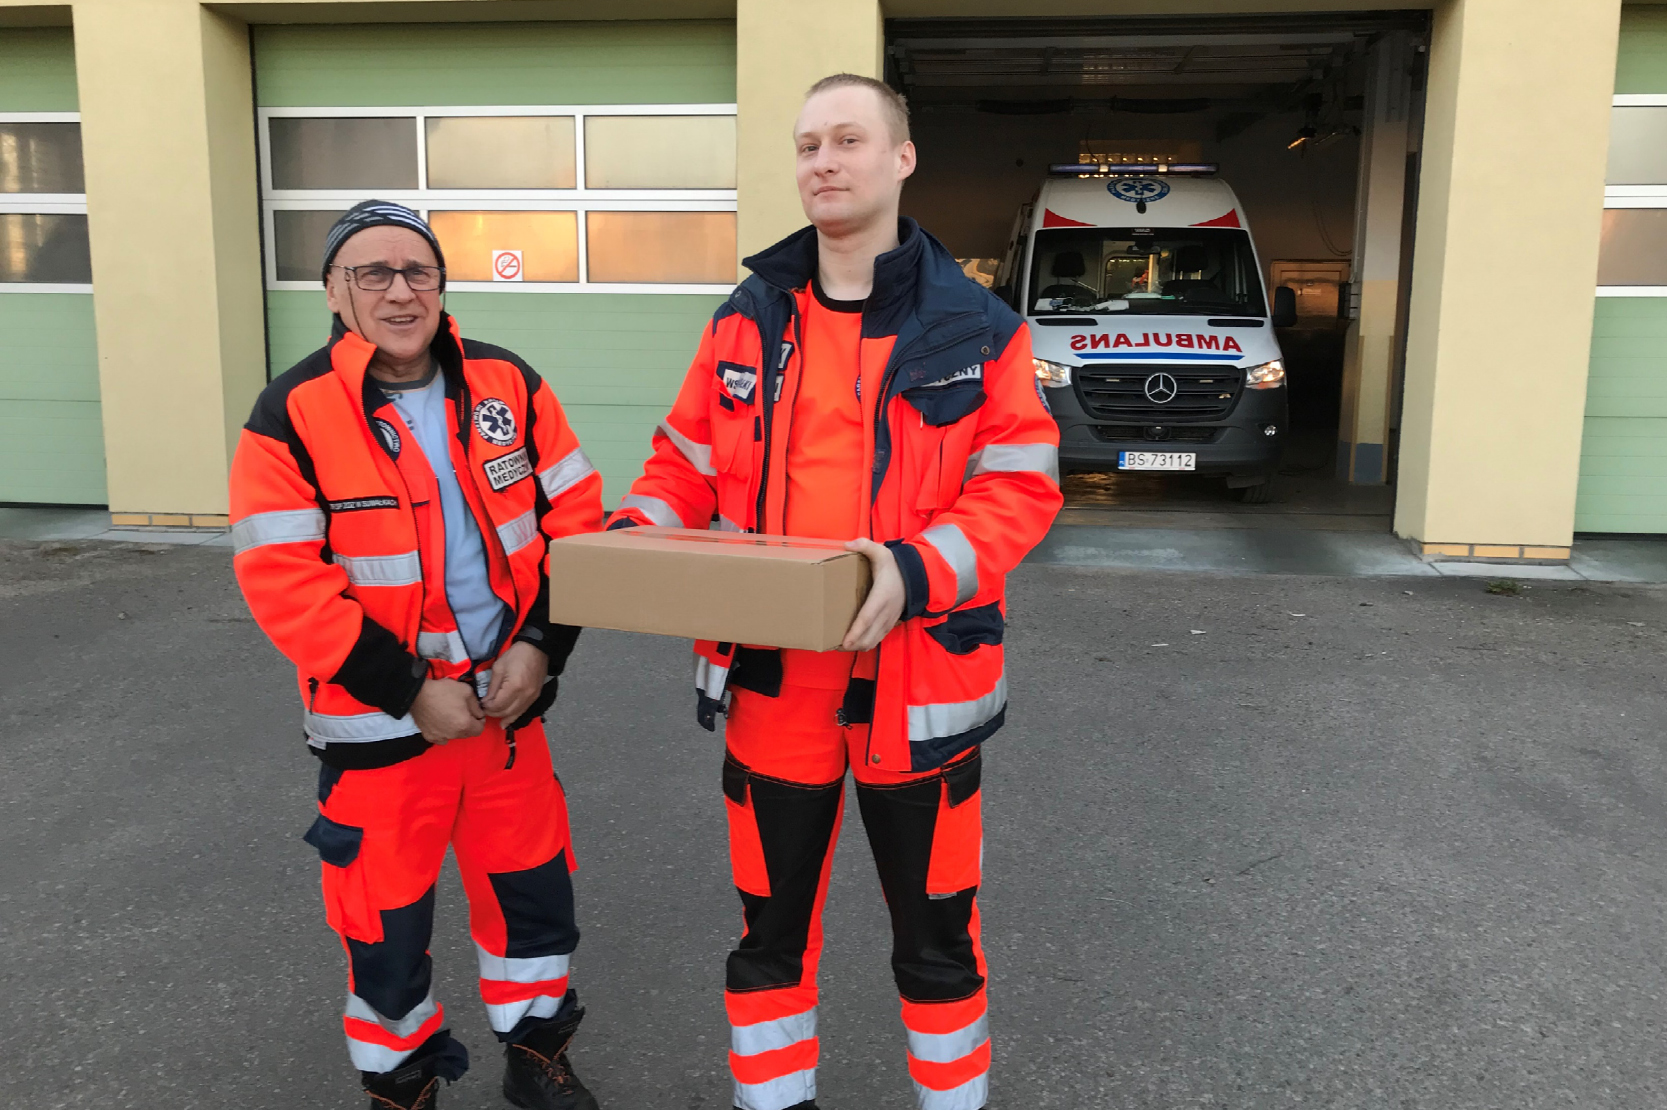 Two Men in EMT uniforms holding box